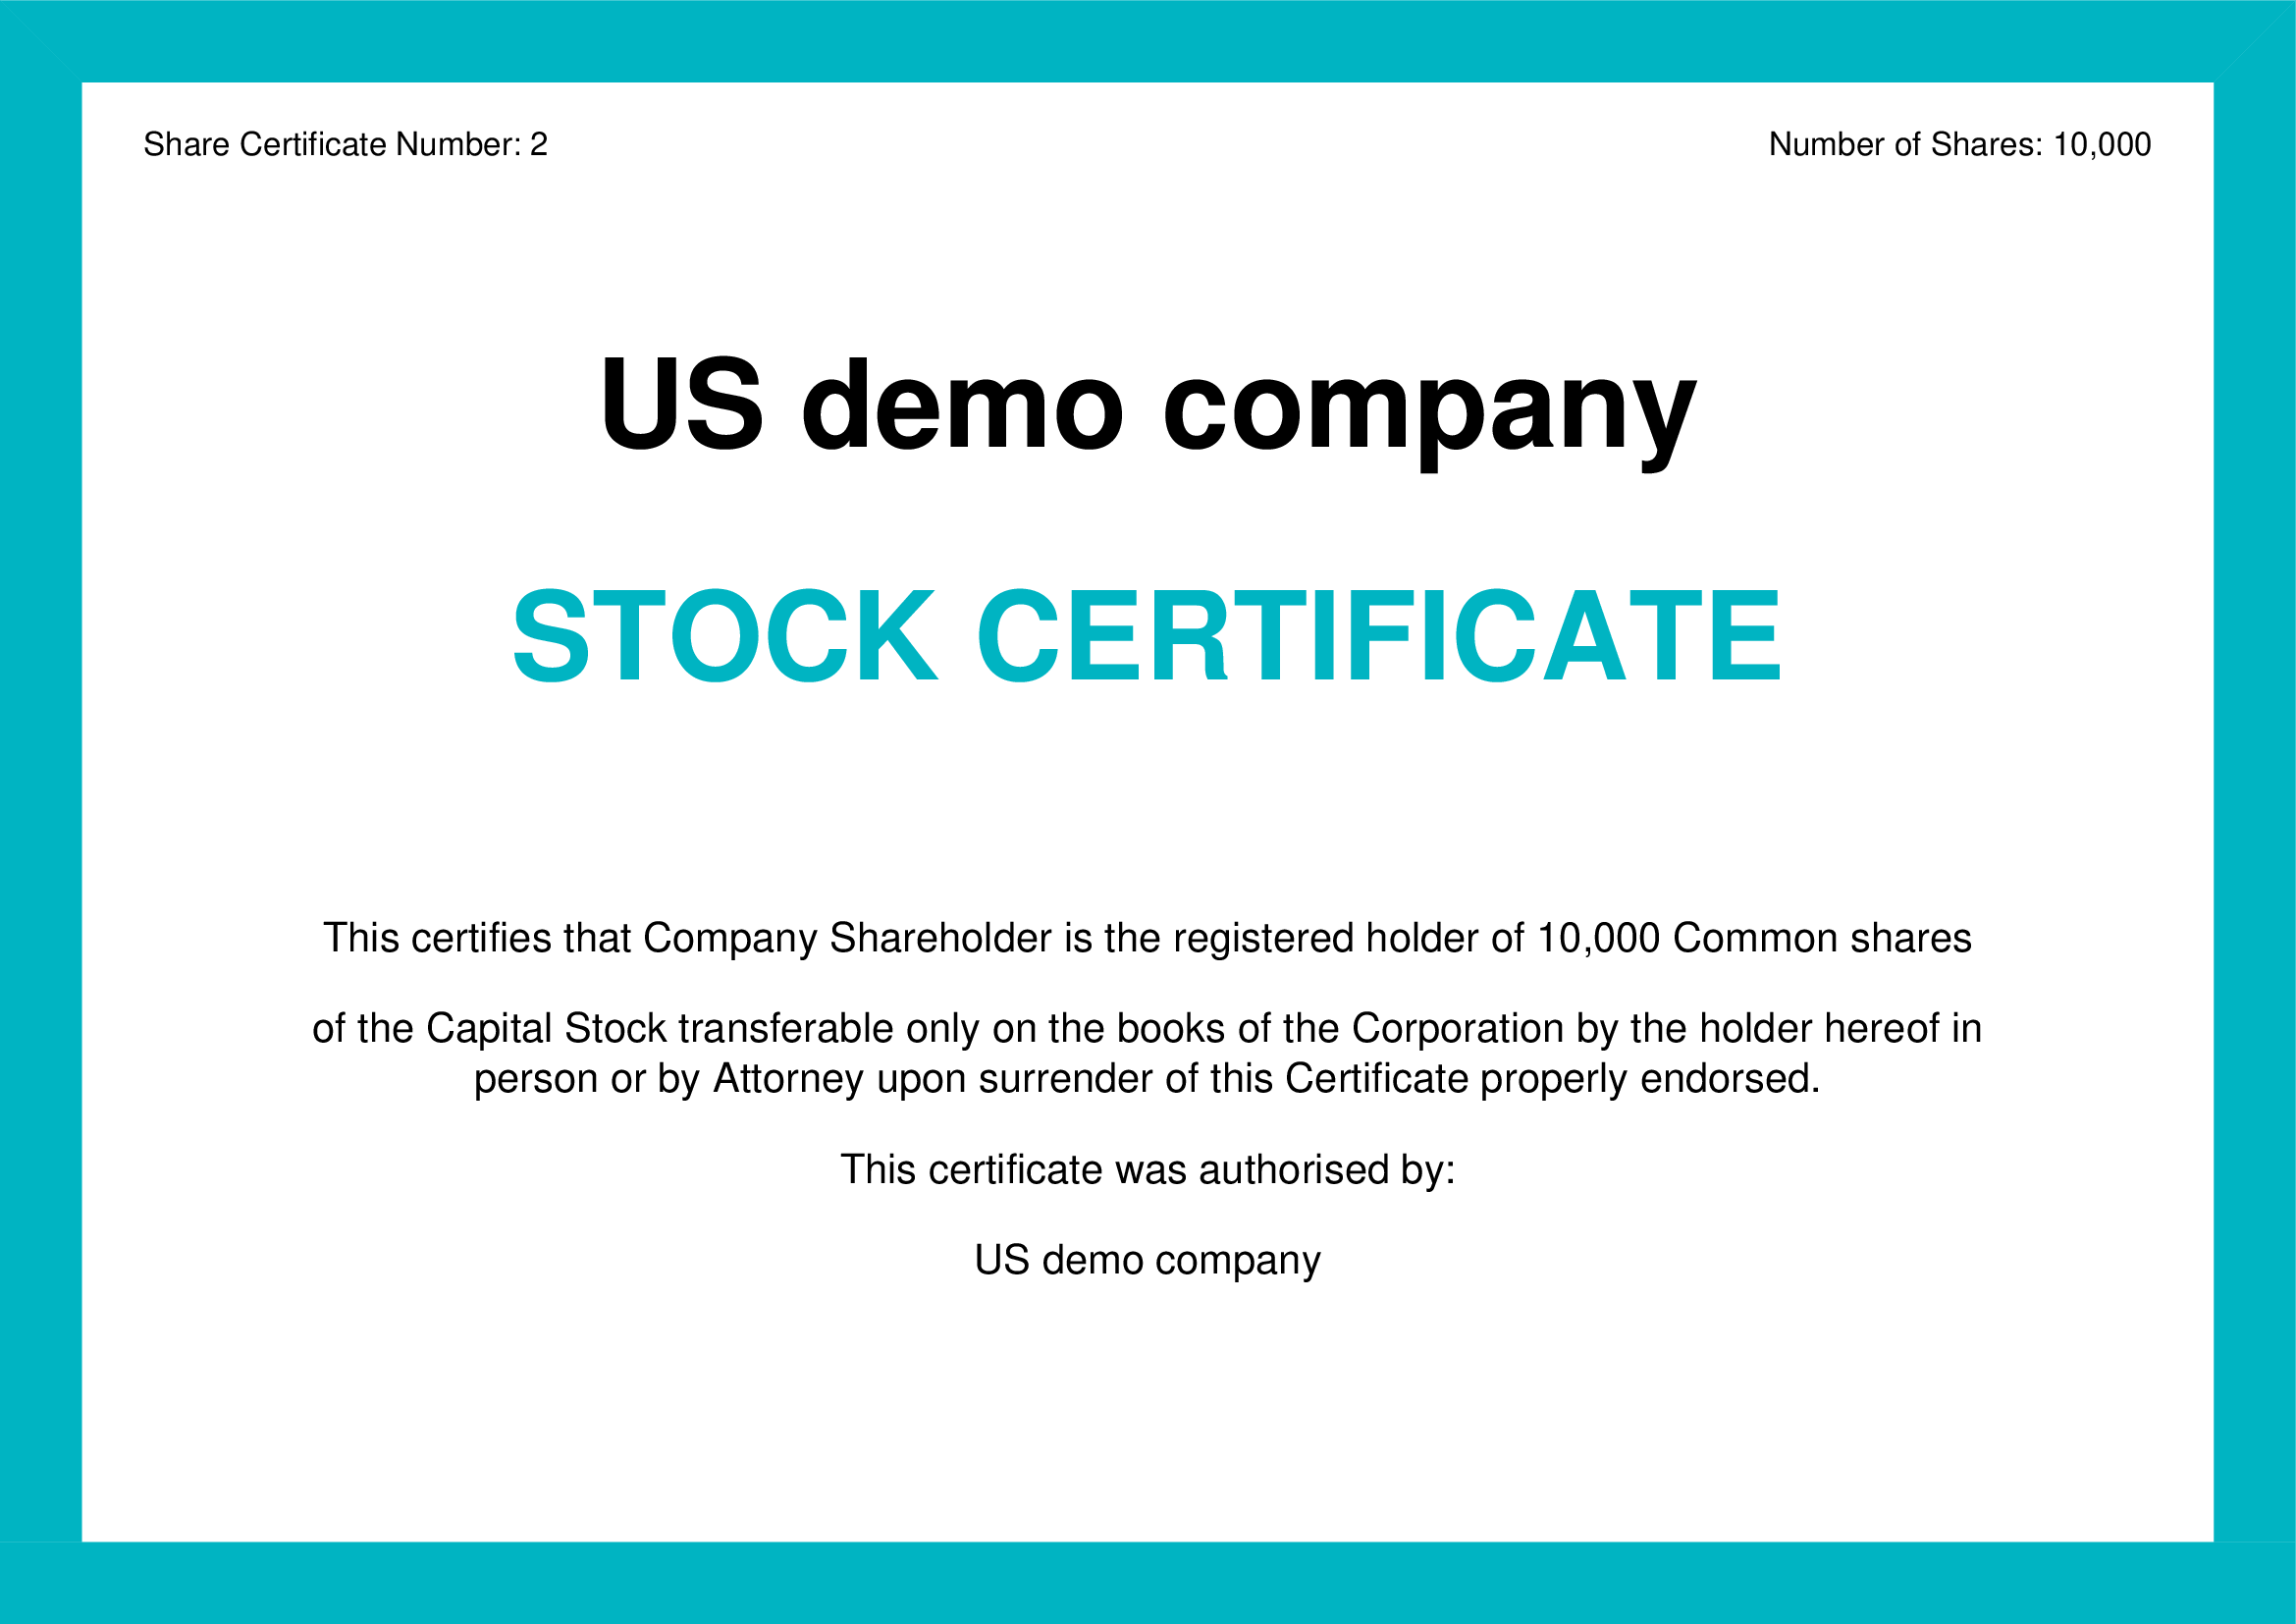 Free stock certificate online generator